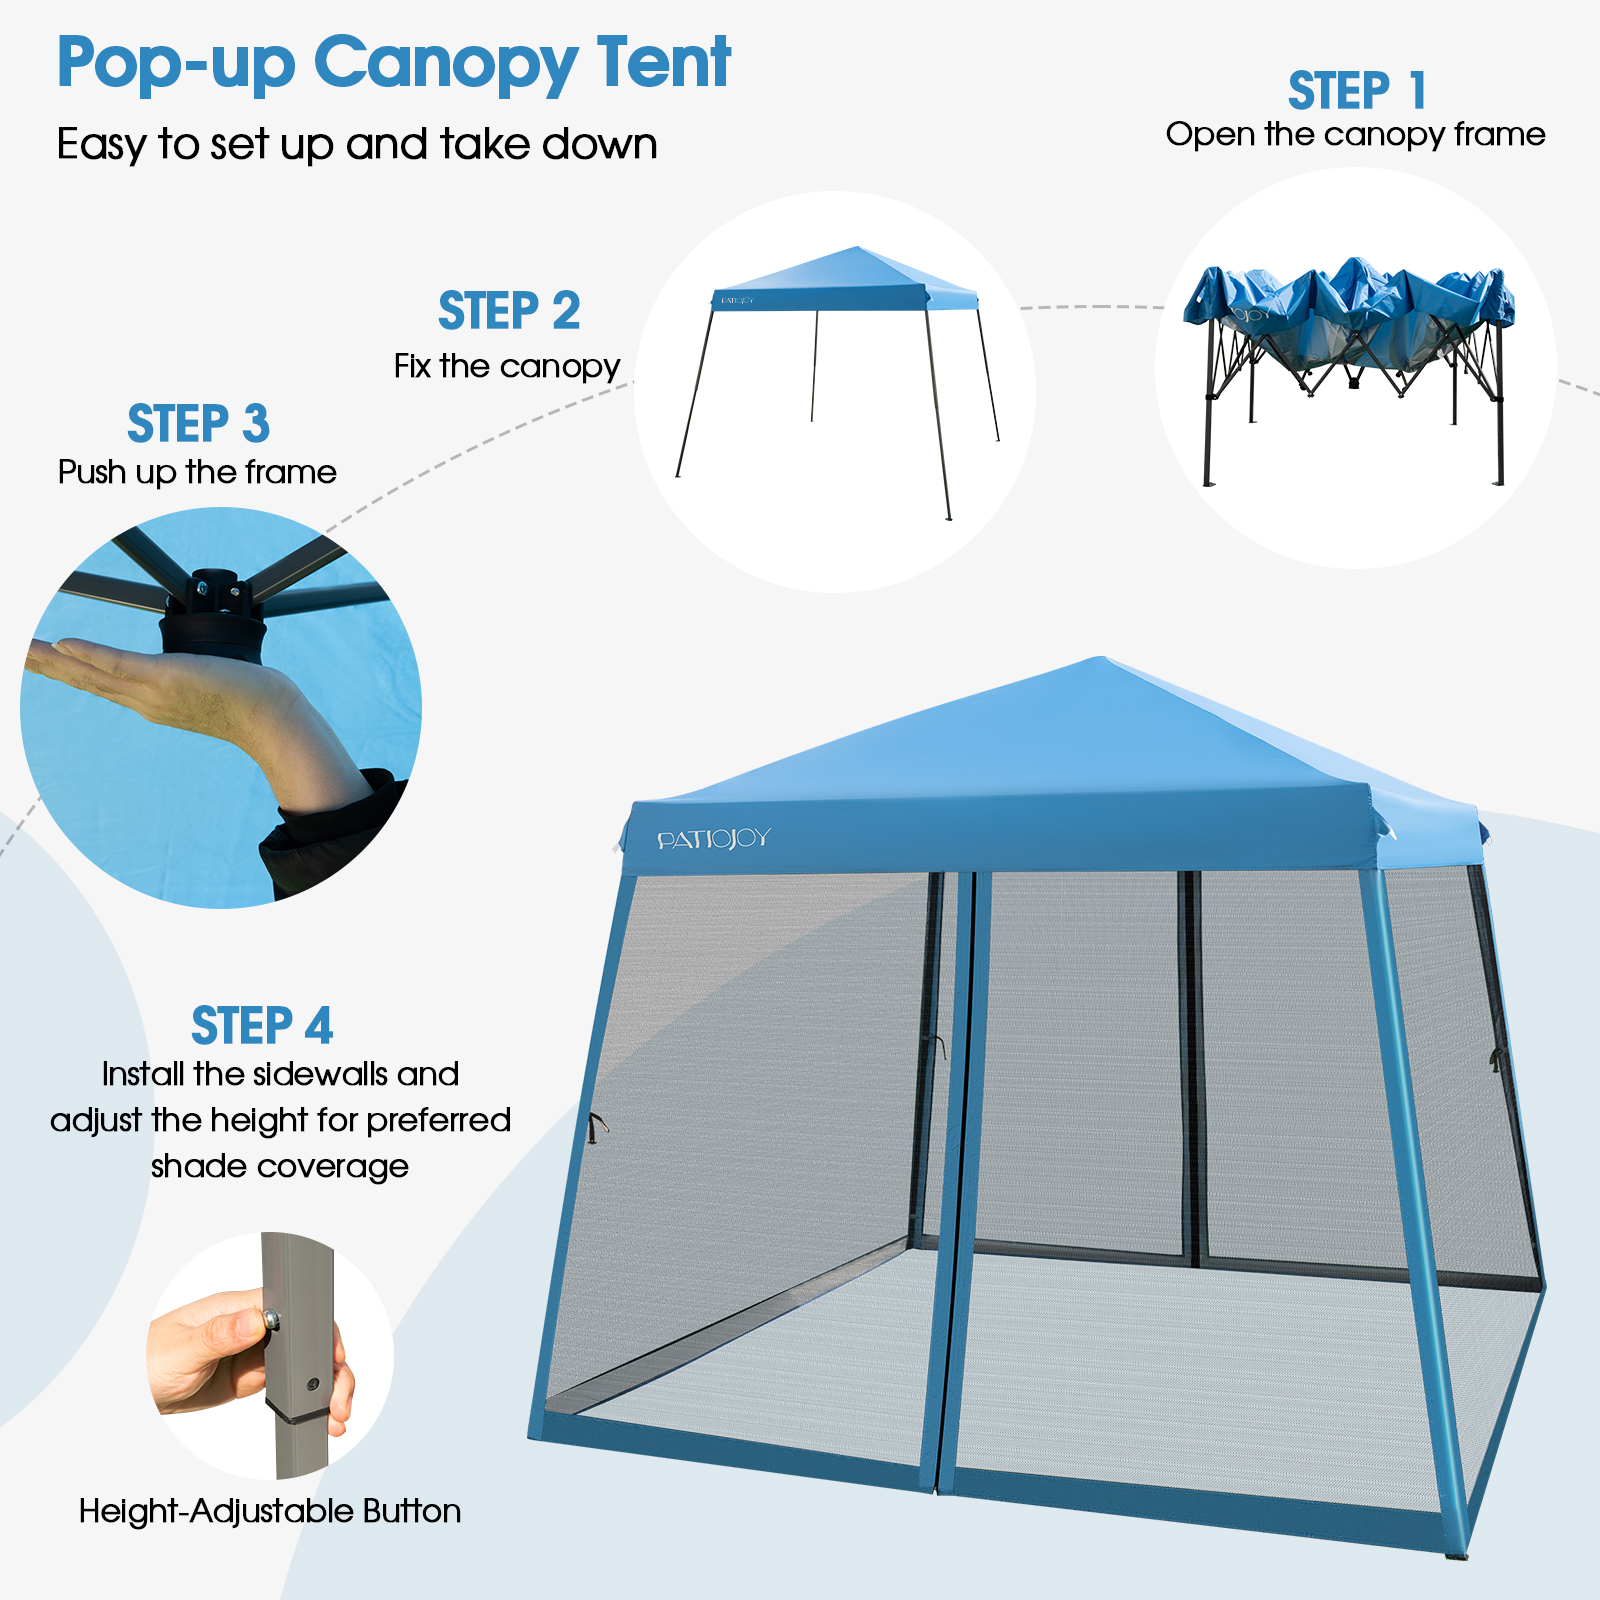 Slanted_Leg_Canopy_Tent-6.jpg